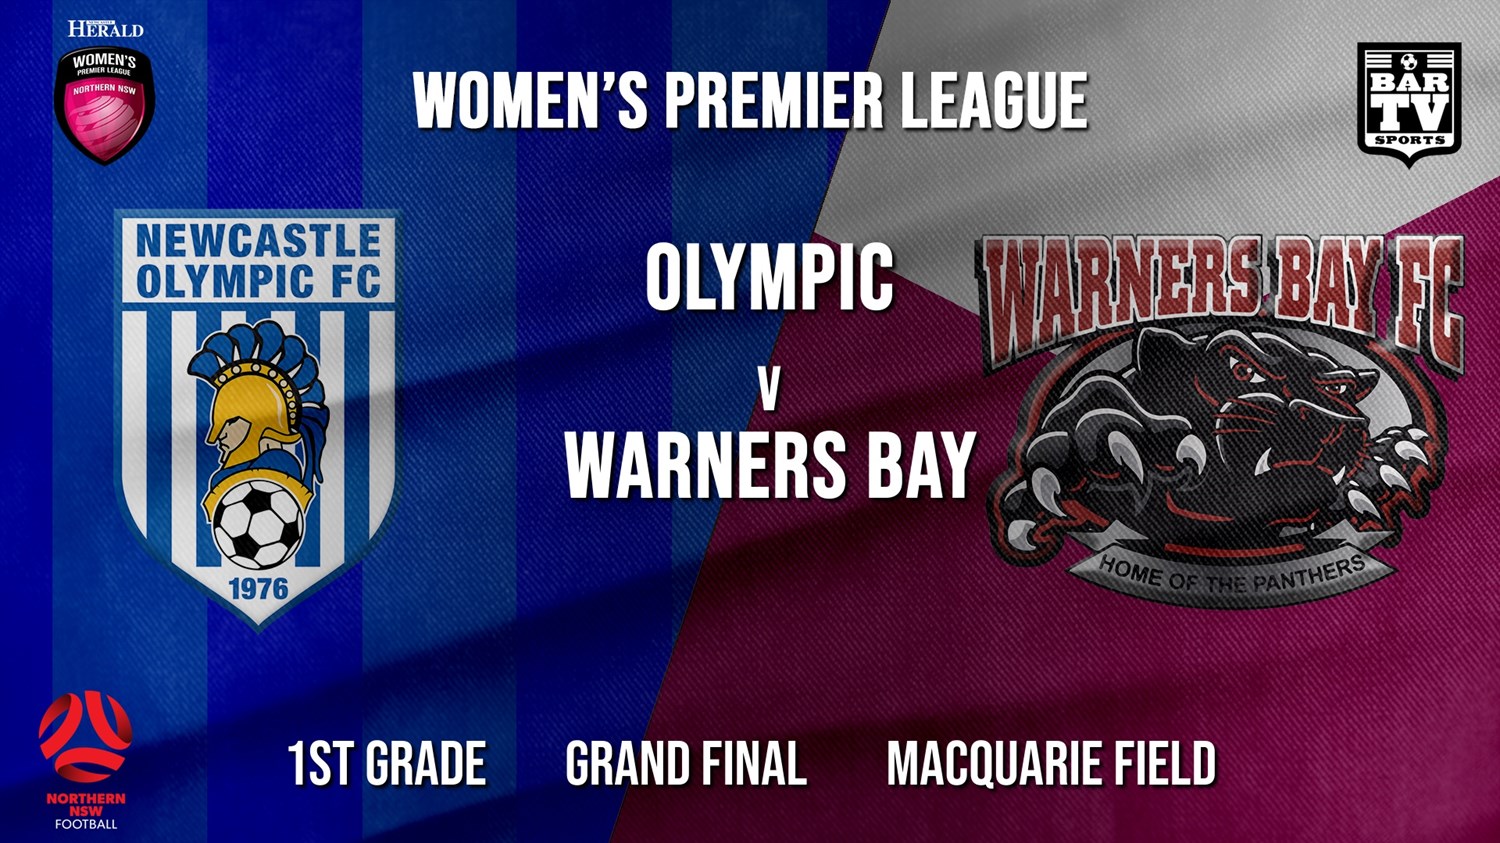 Herald Women’s Premier League Grand Final - 1st Grade - Newcastle Olympic (Women's) v Warners Bay (Womens) Minigame Slate Image